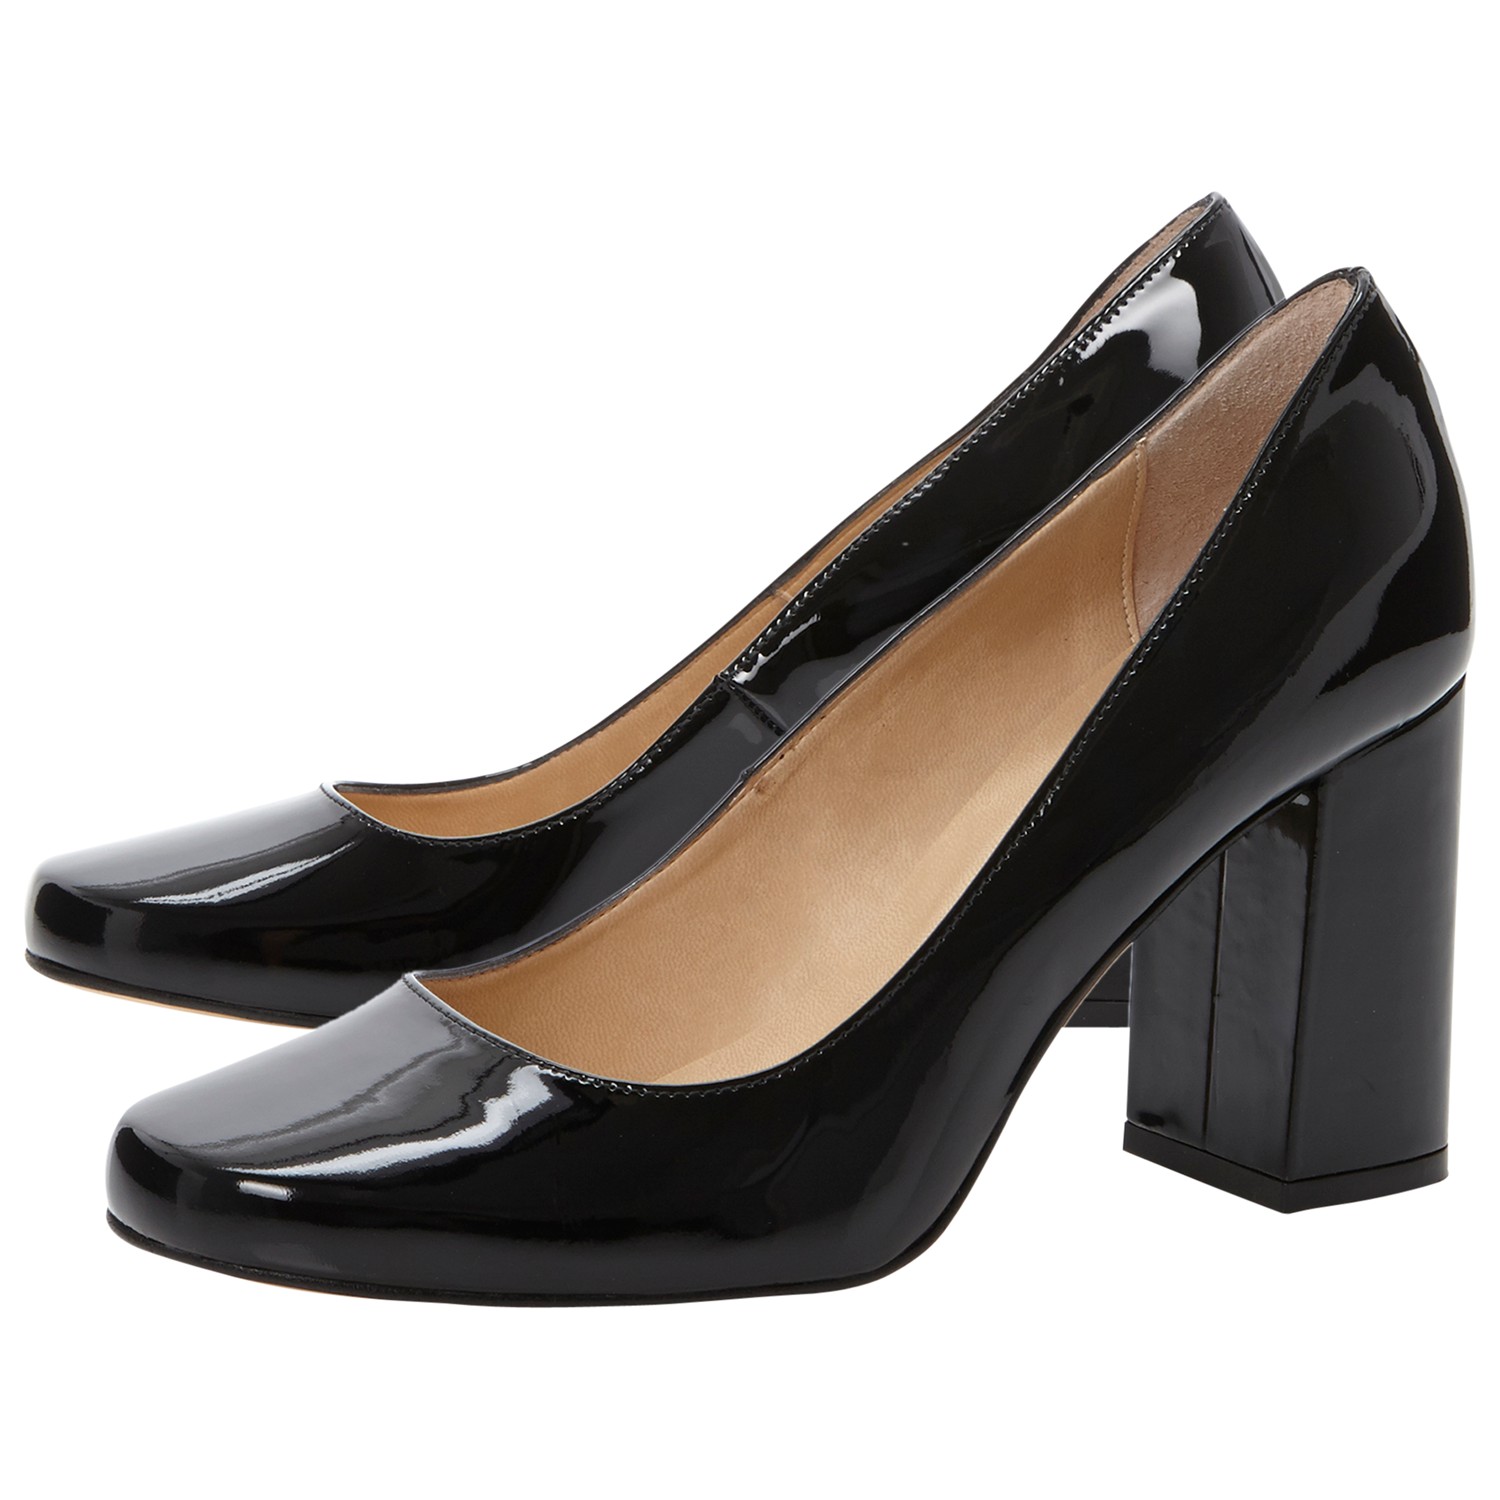 Dune Agaze Block Heel Court Shoes in Patent Black (Black) - Lyst